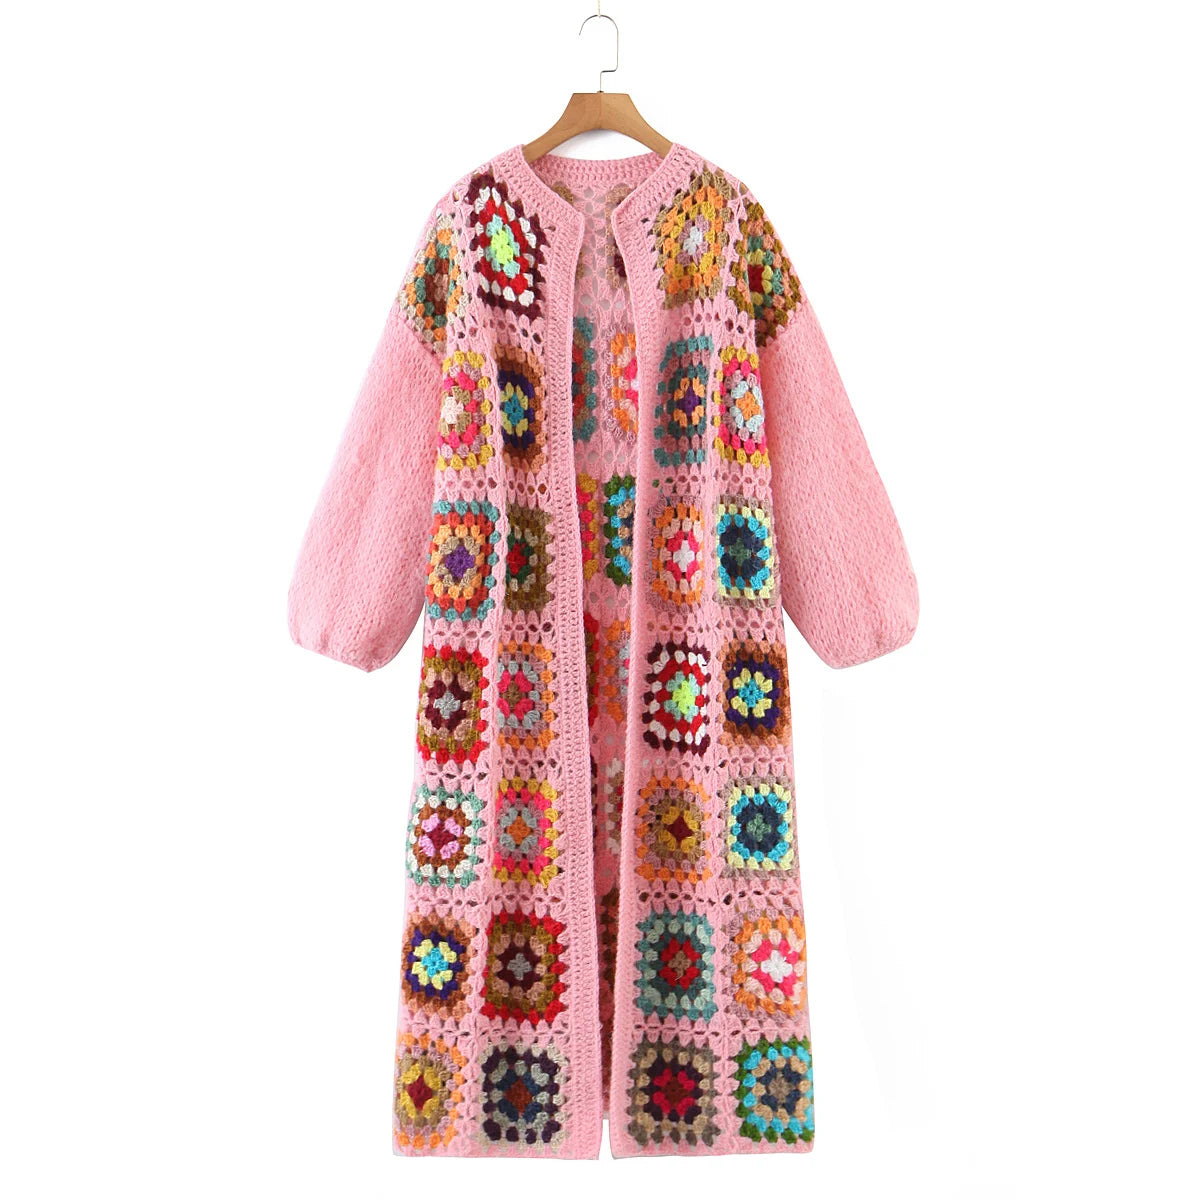 Bohemia Vintage Colored Plaid Flower Granny Square Hand Crochet Long Cardigan Coats & Jackets jehouze One Size Pink 